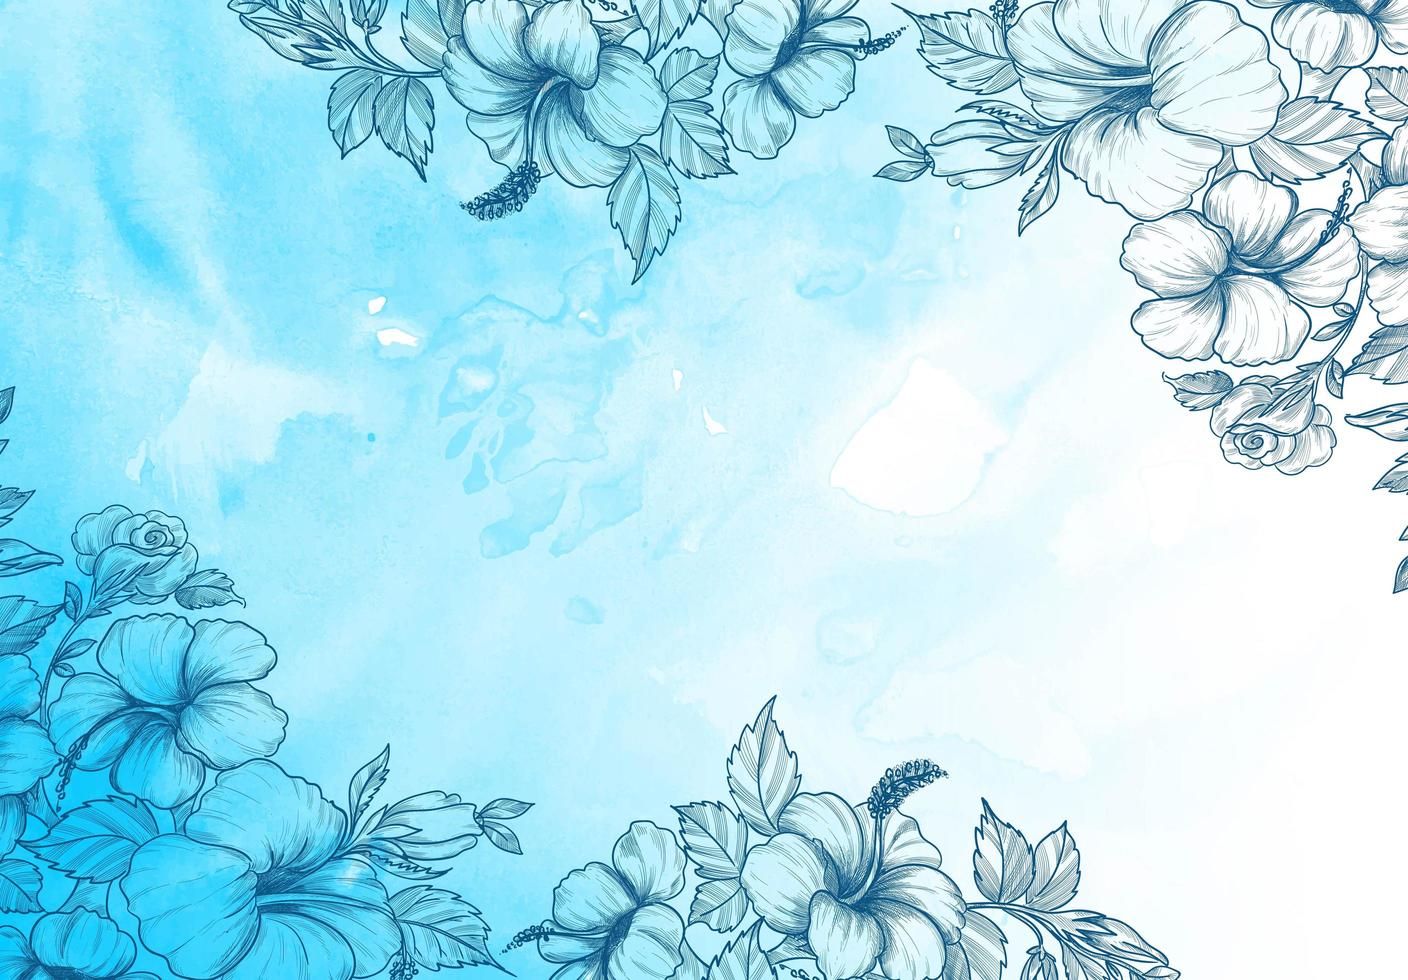 dekorativa blommor på akvarell konsistens i blått vektor